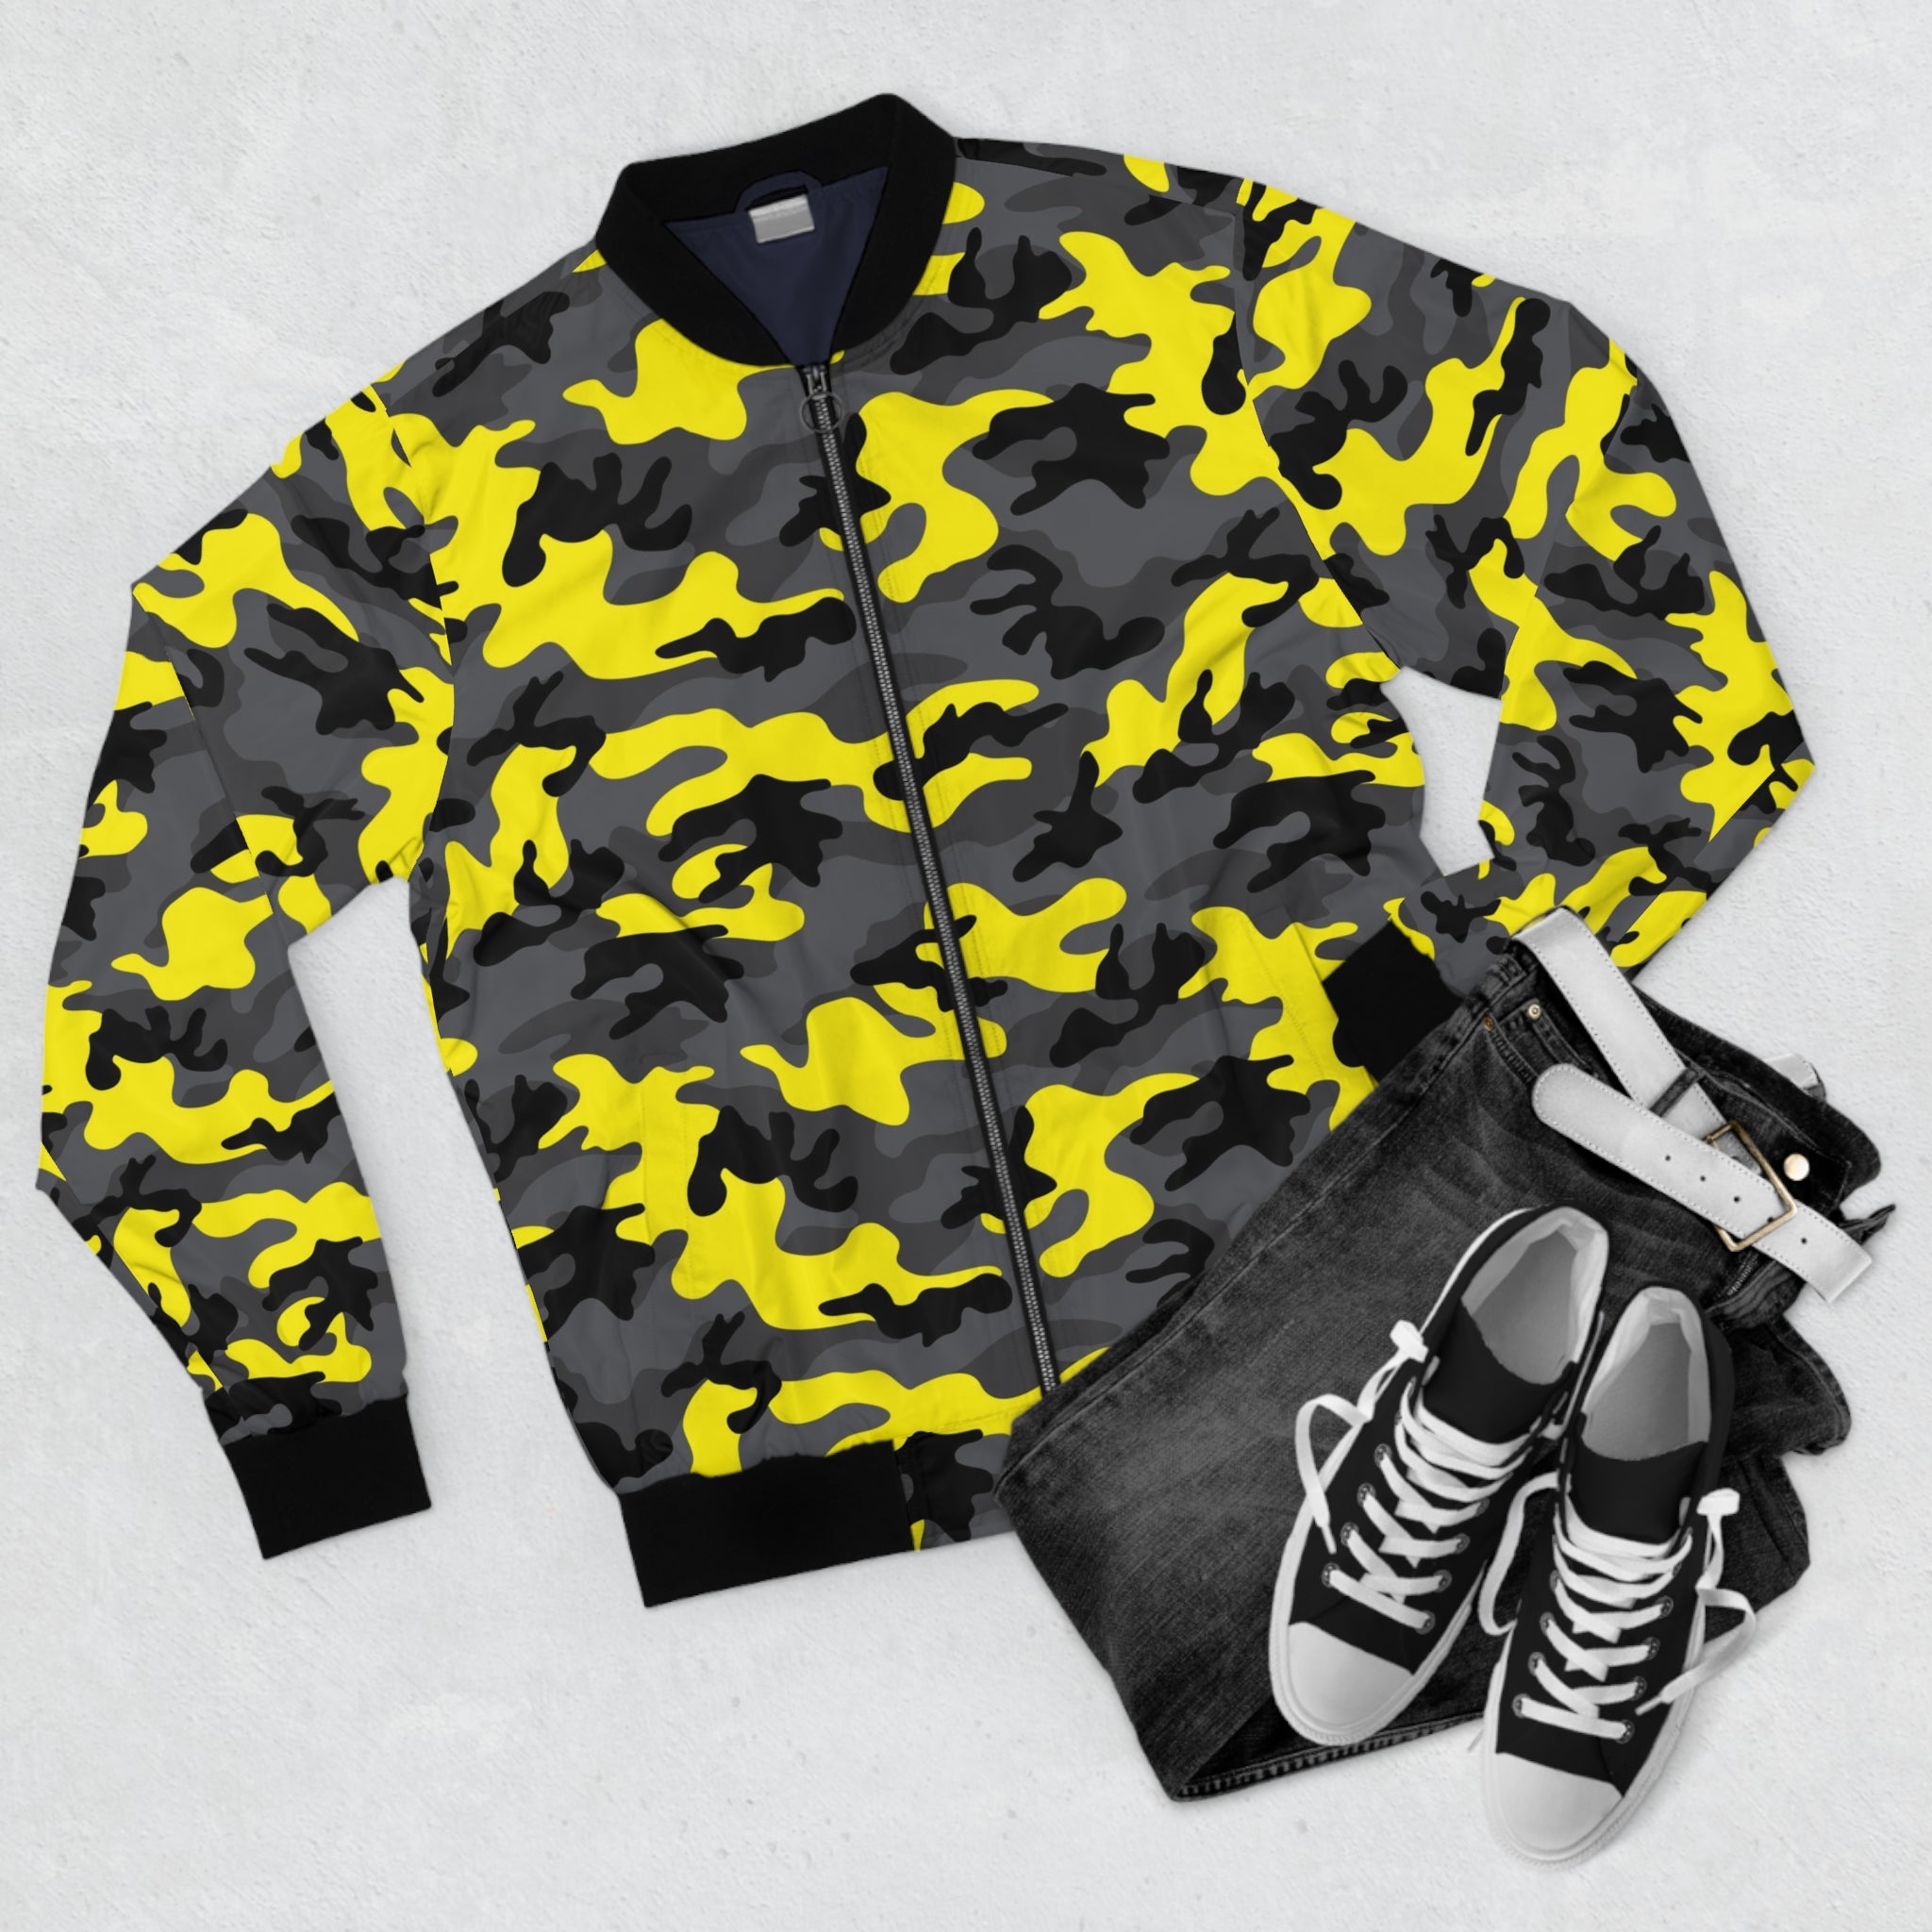 Men's Black Yellow Military Camouflage Fashion Bomber Jacket